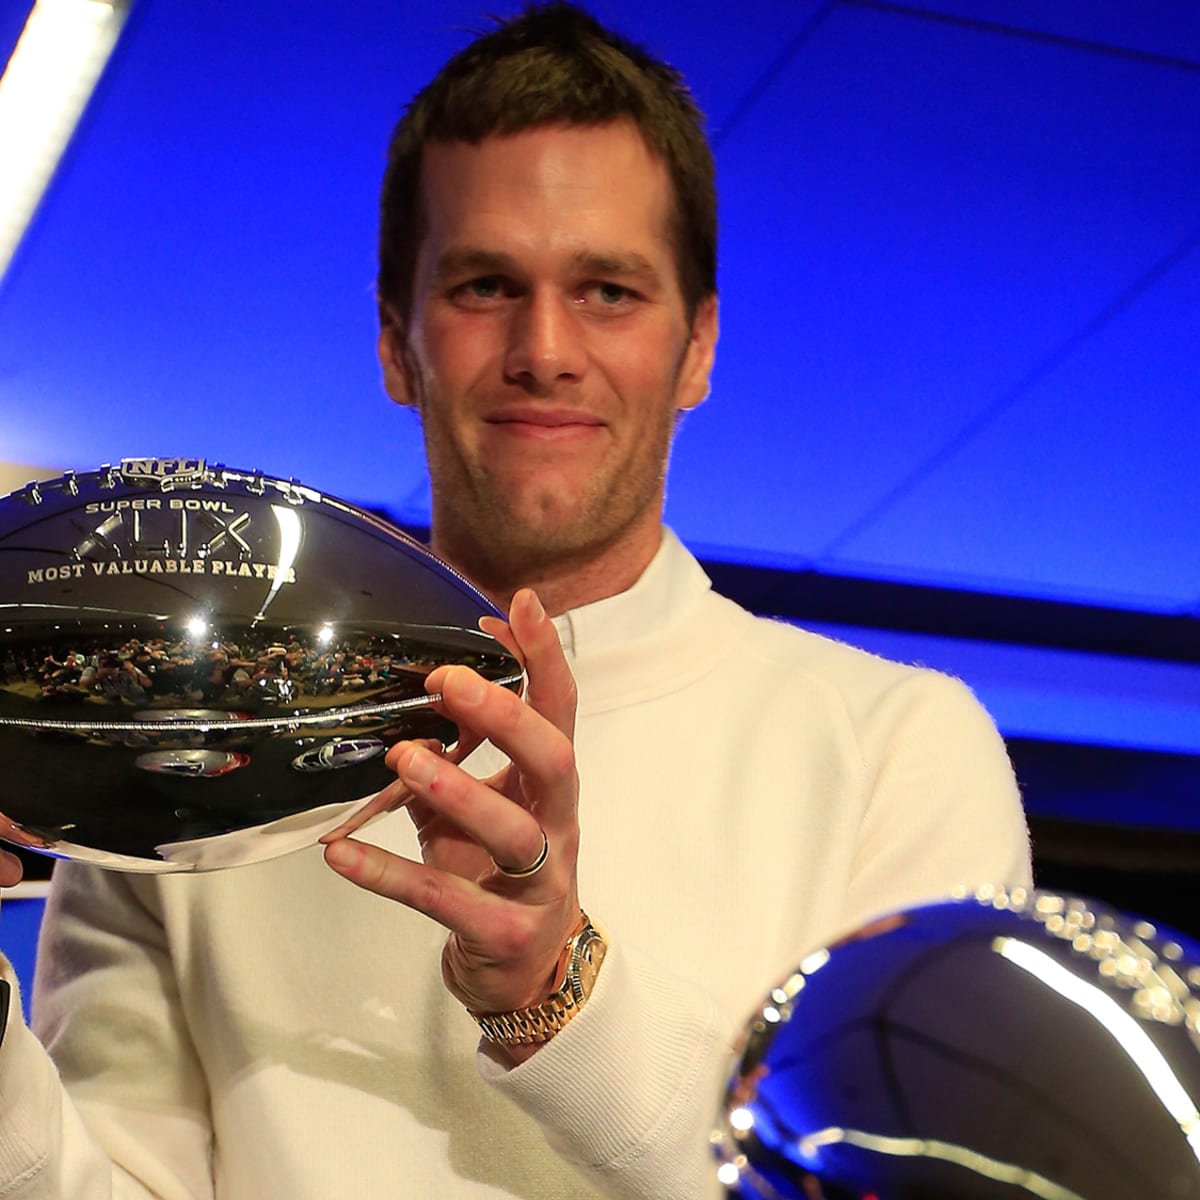 Who won the NFL Super Bowl MVP award?